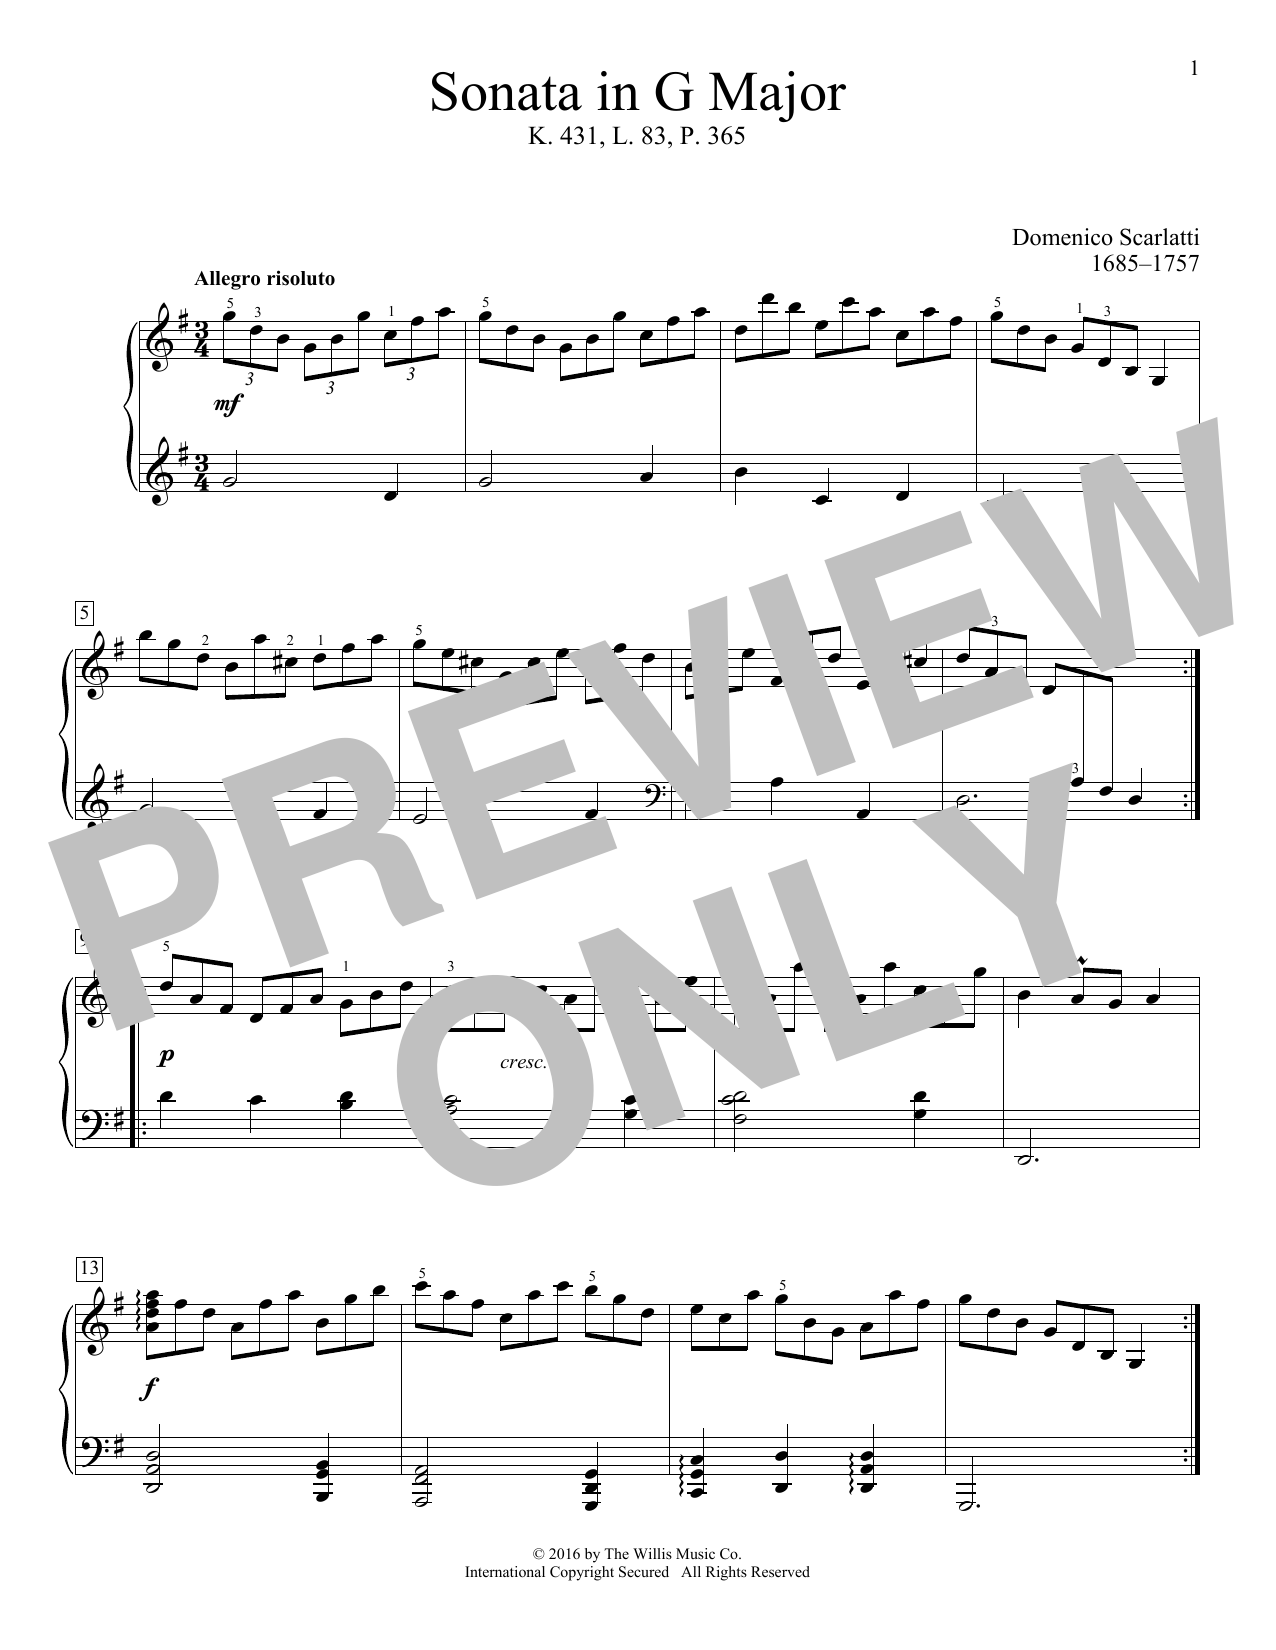 Domenico Scarlatti Sonata In G Major, K. 431, L. 83, P. 365 sheet music notes and chords arranged for Educational Piano